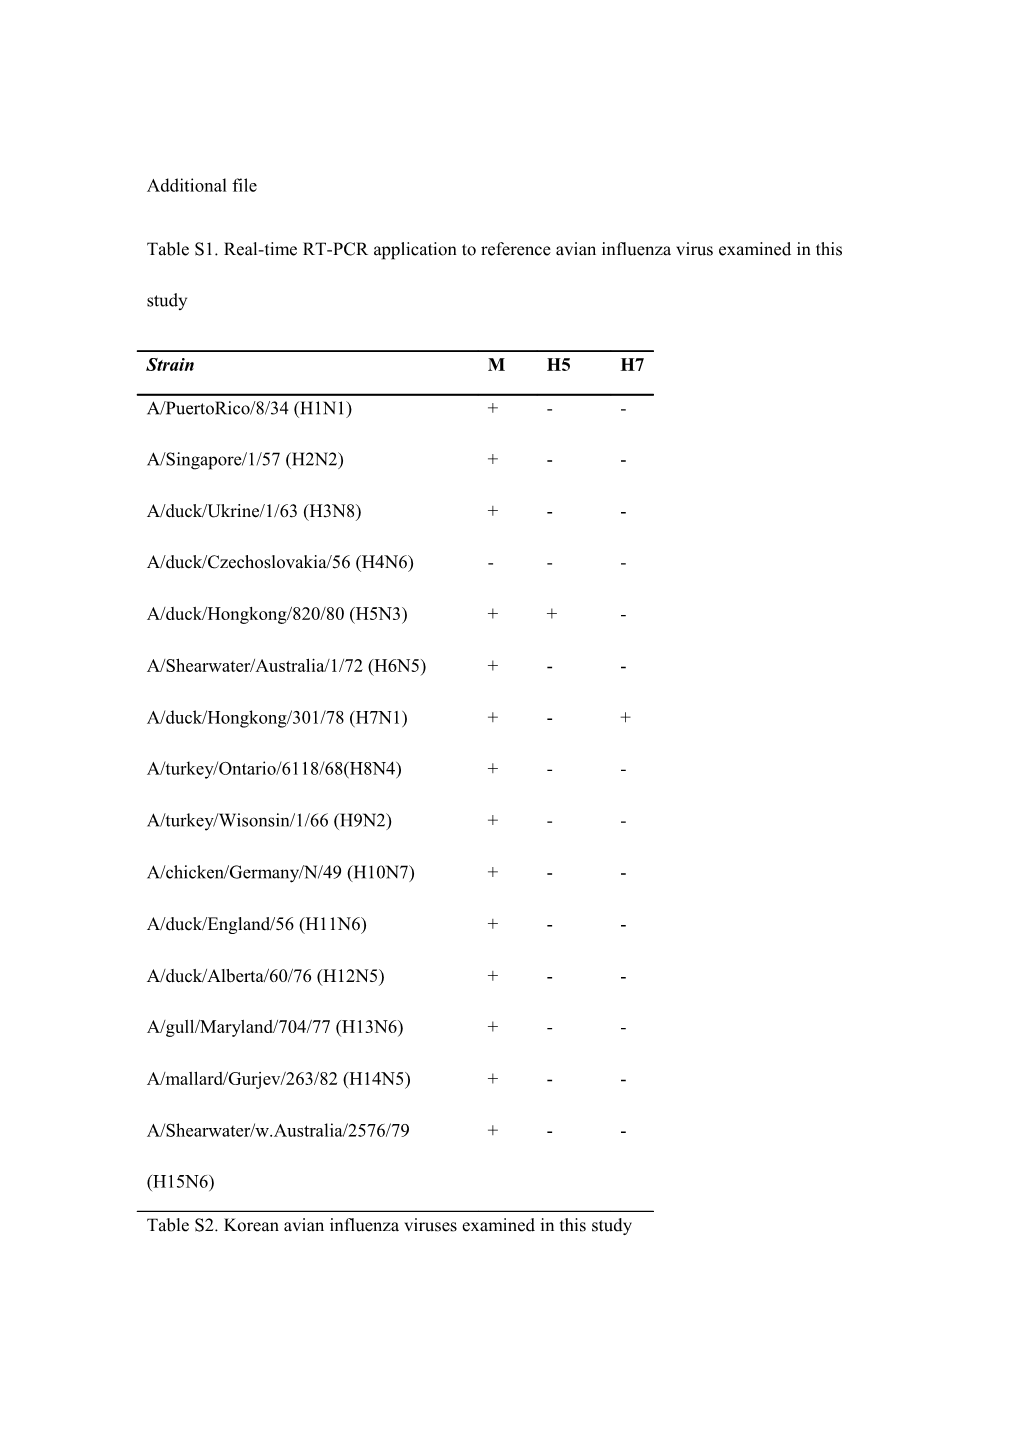 Table S2. Korean Avian Influenza Viruses Examined in This Study